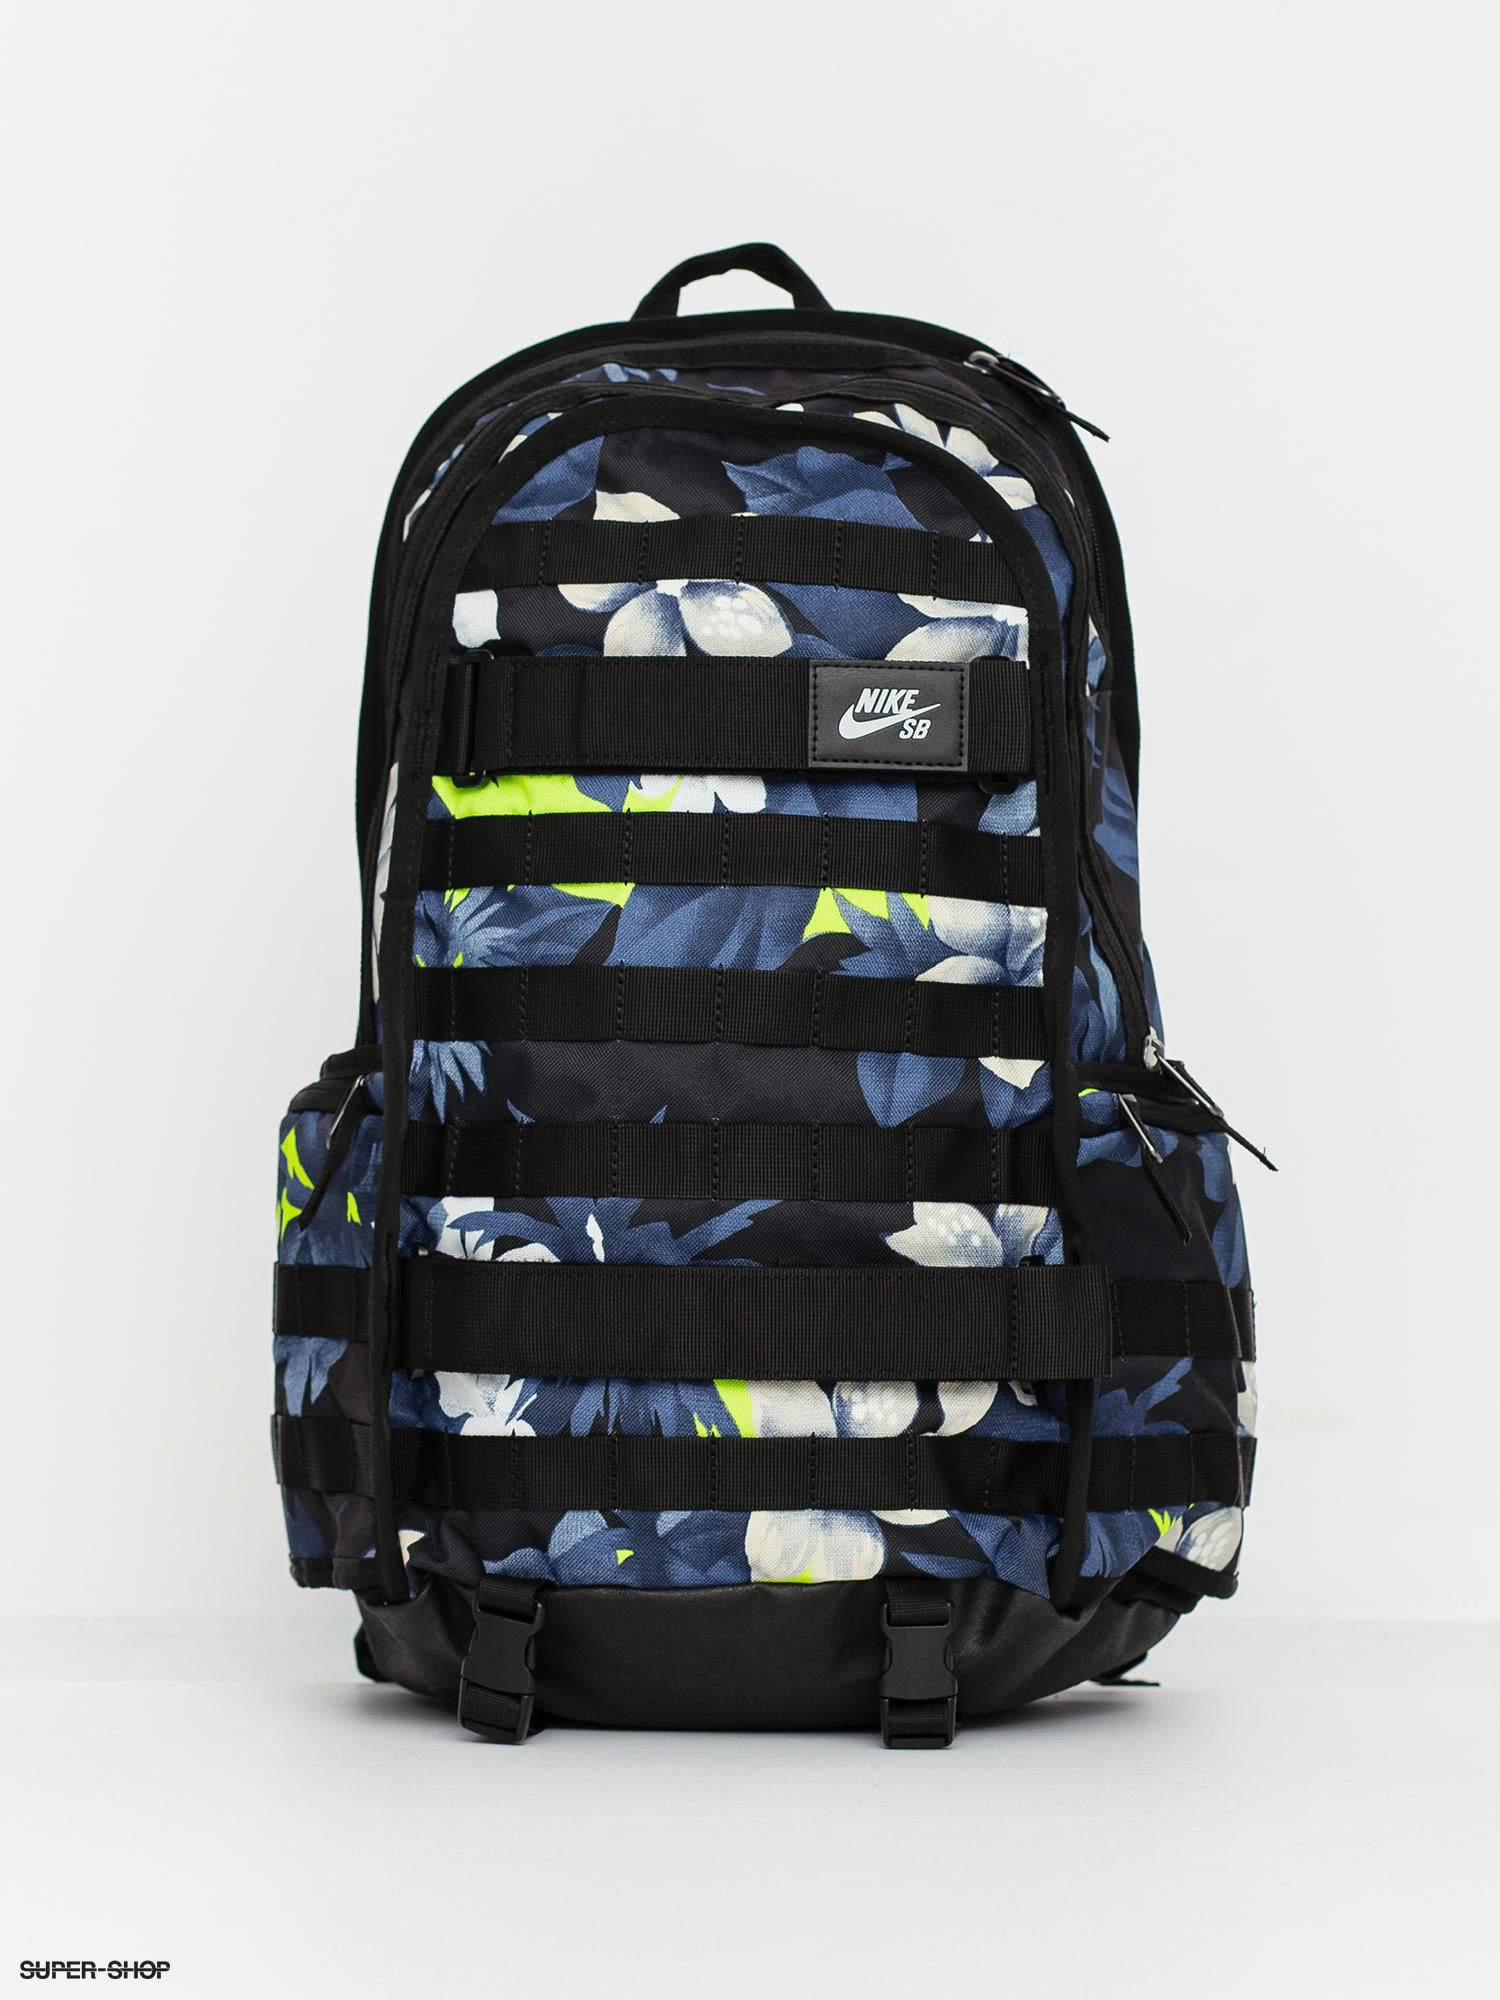 Nike Sb Rpm Backpack Black Black White